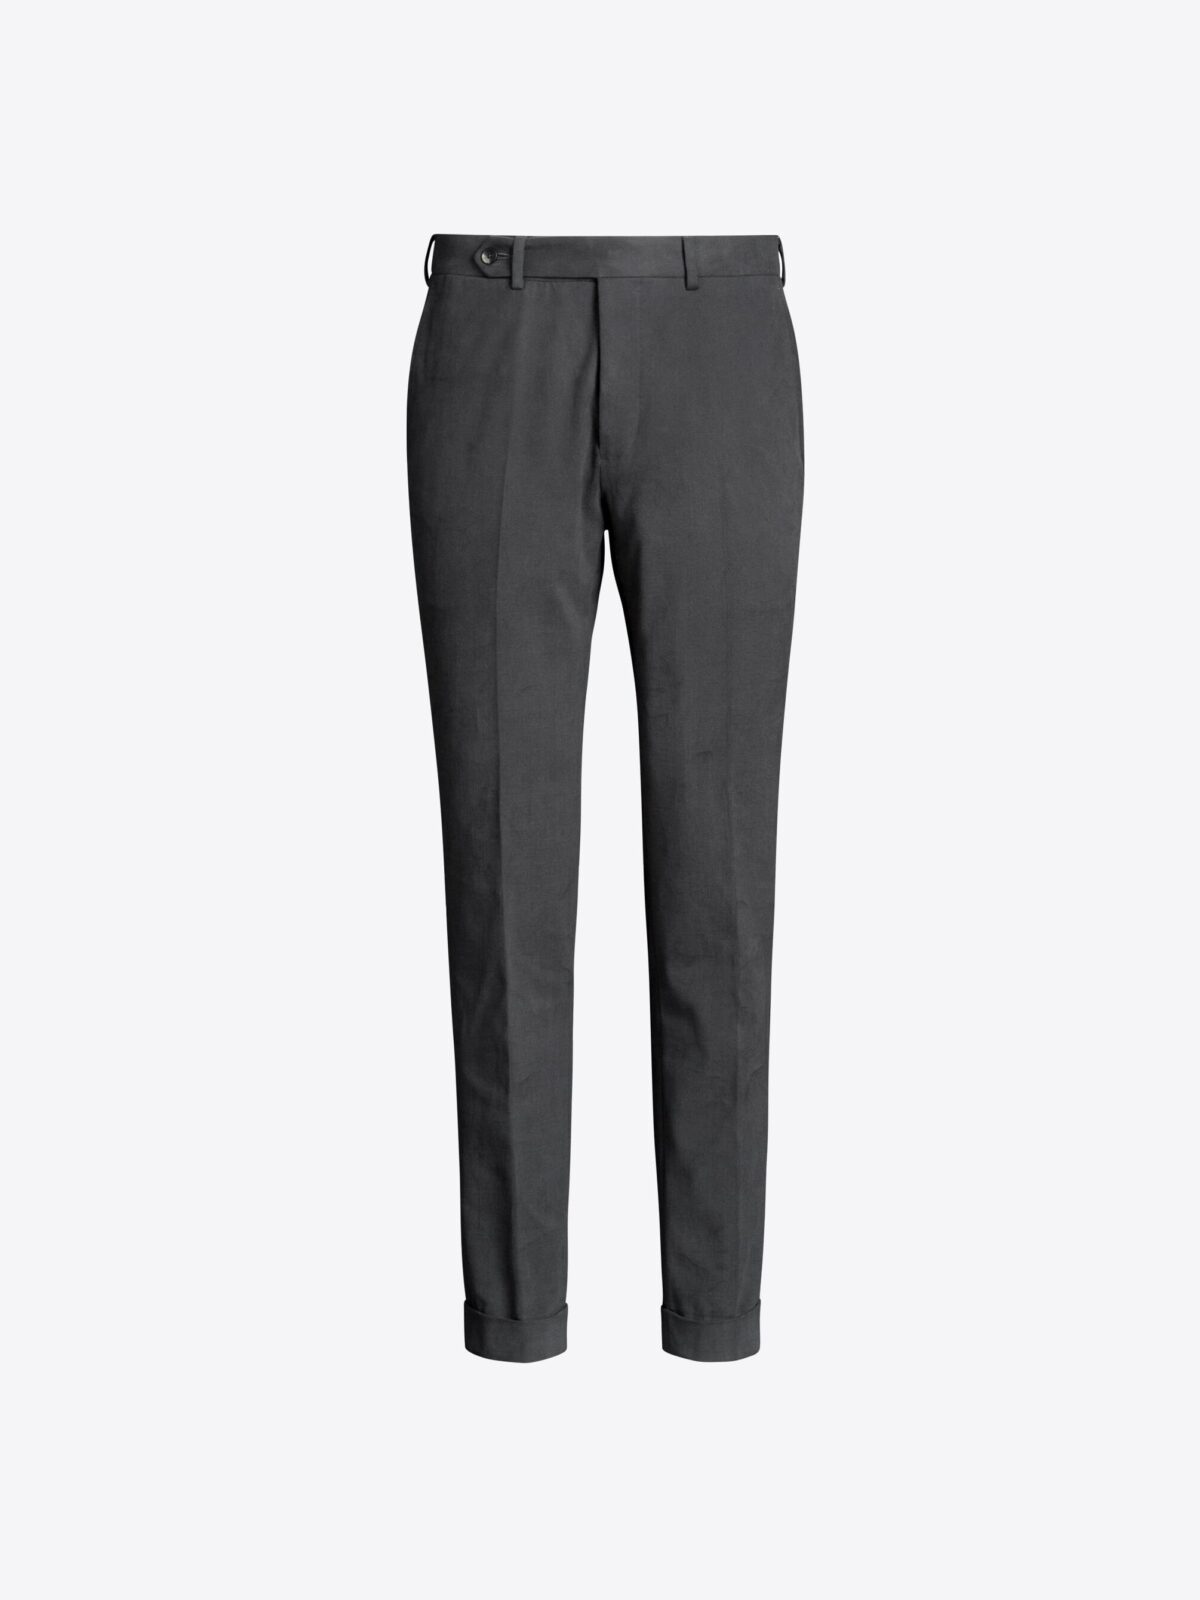 New men's fashion casual pants 100% cotton, high quality men's business  casual pants